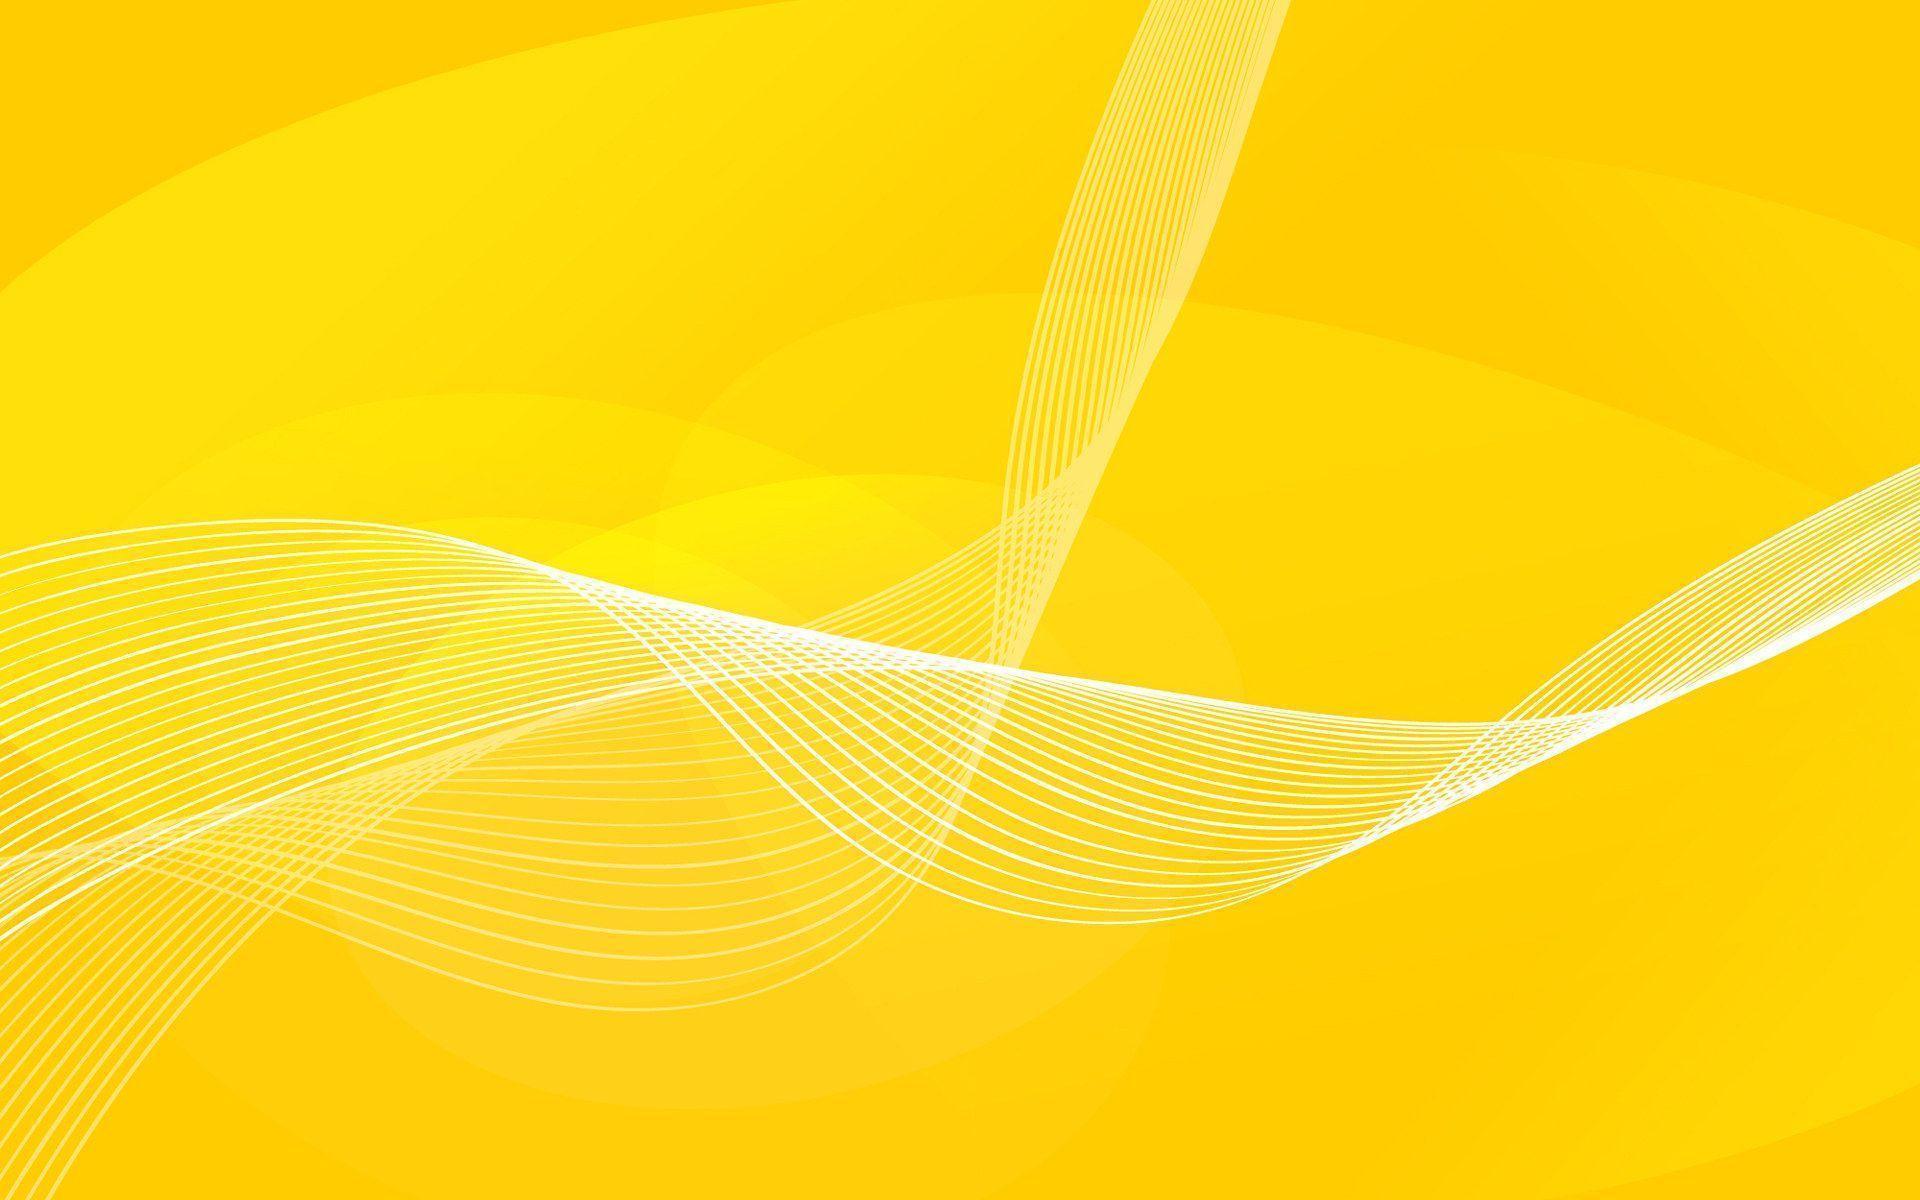 Free Vector  Yellow sunburst background design  Background design Vector  free Sunburst